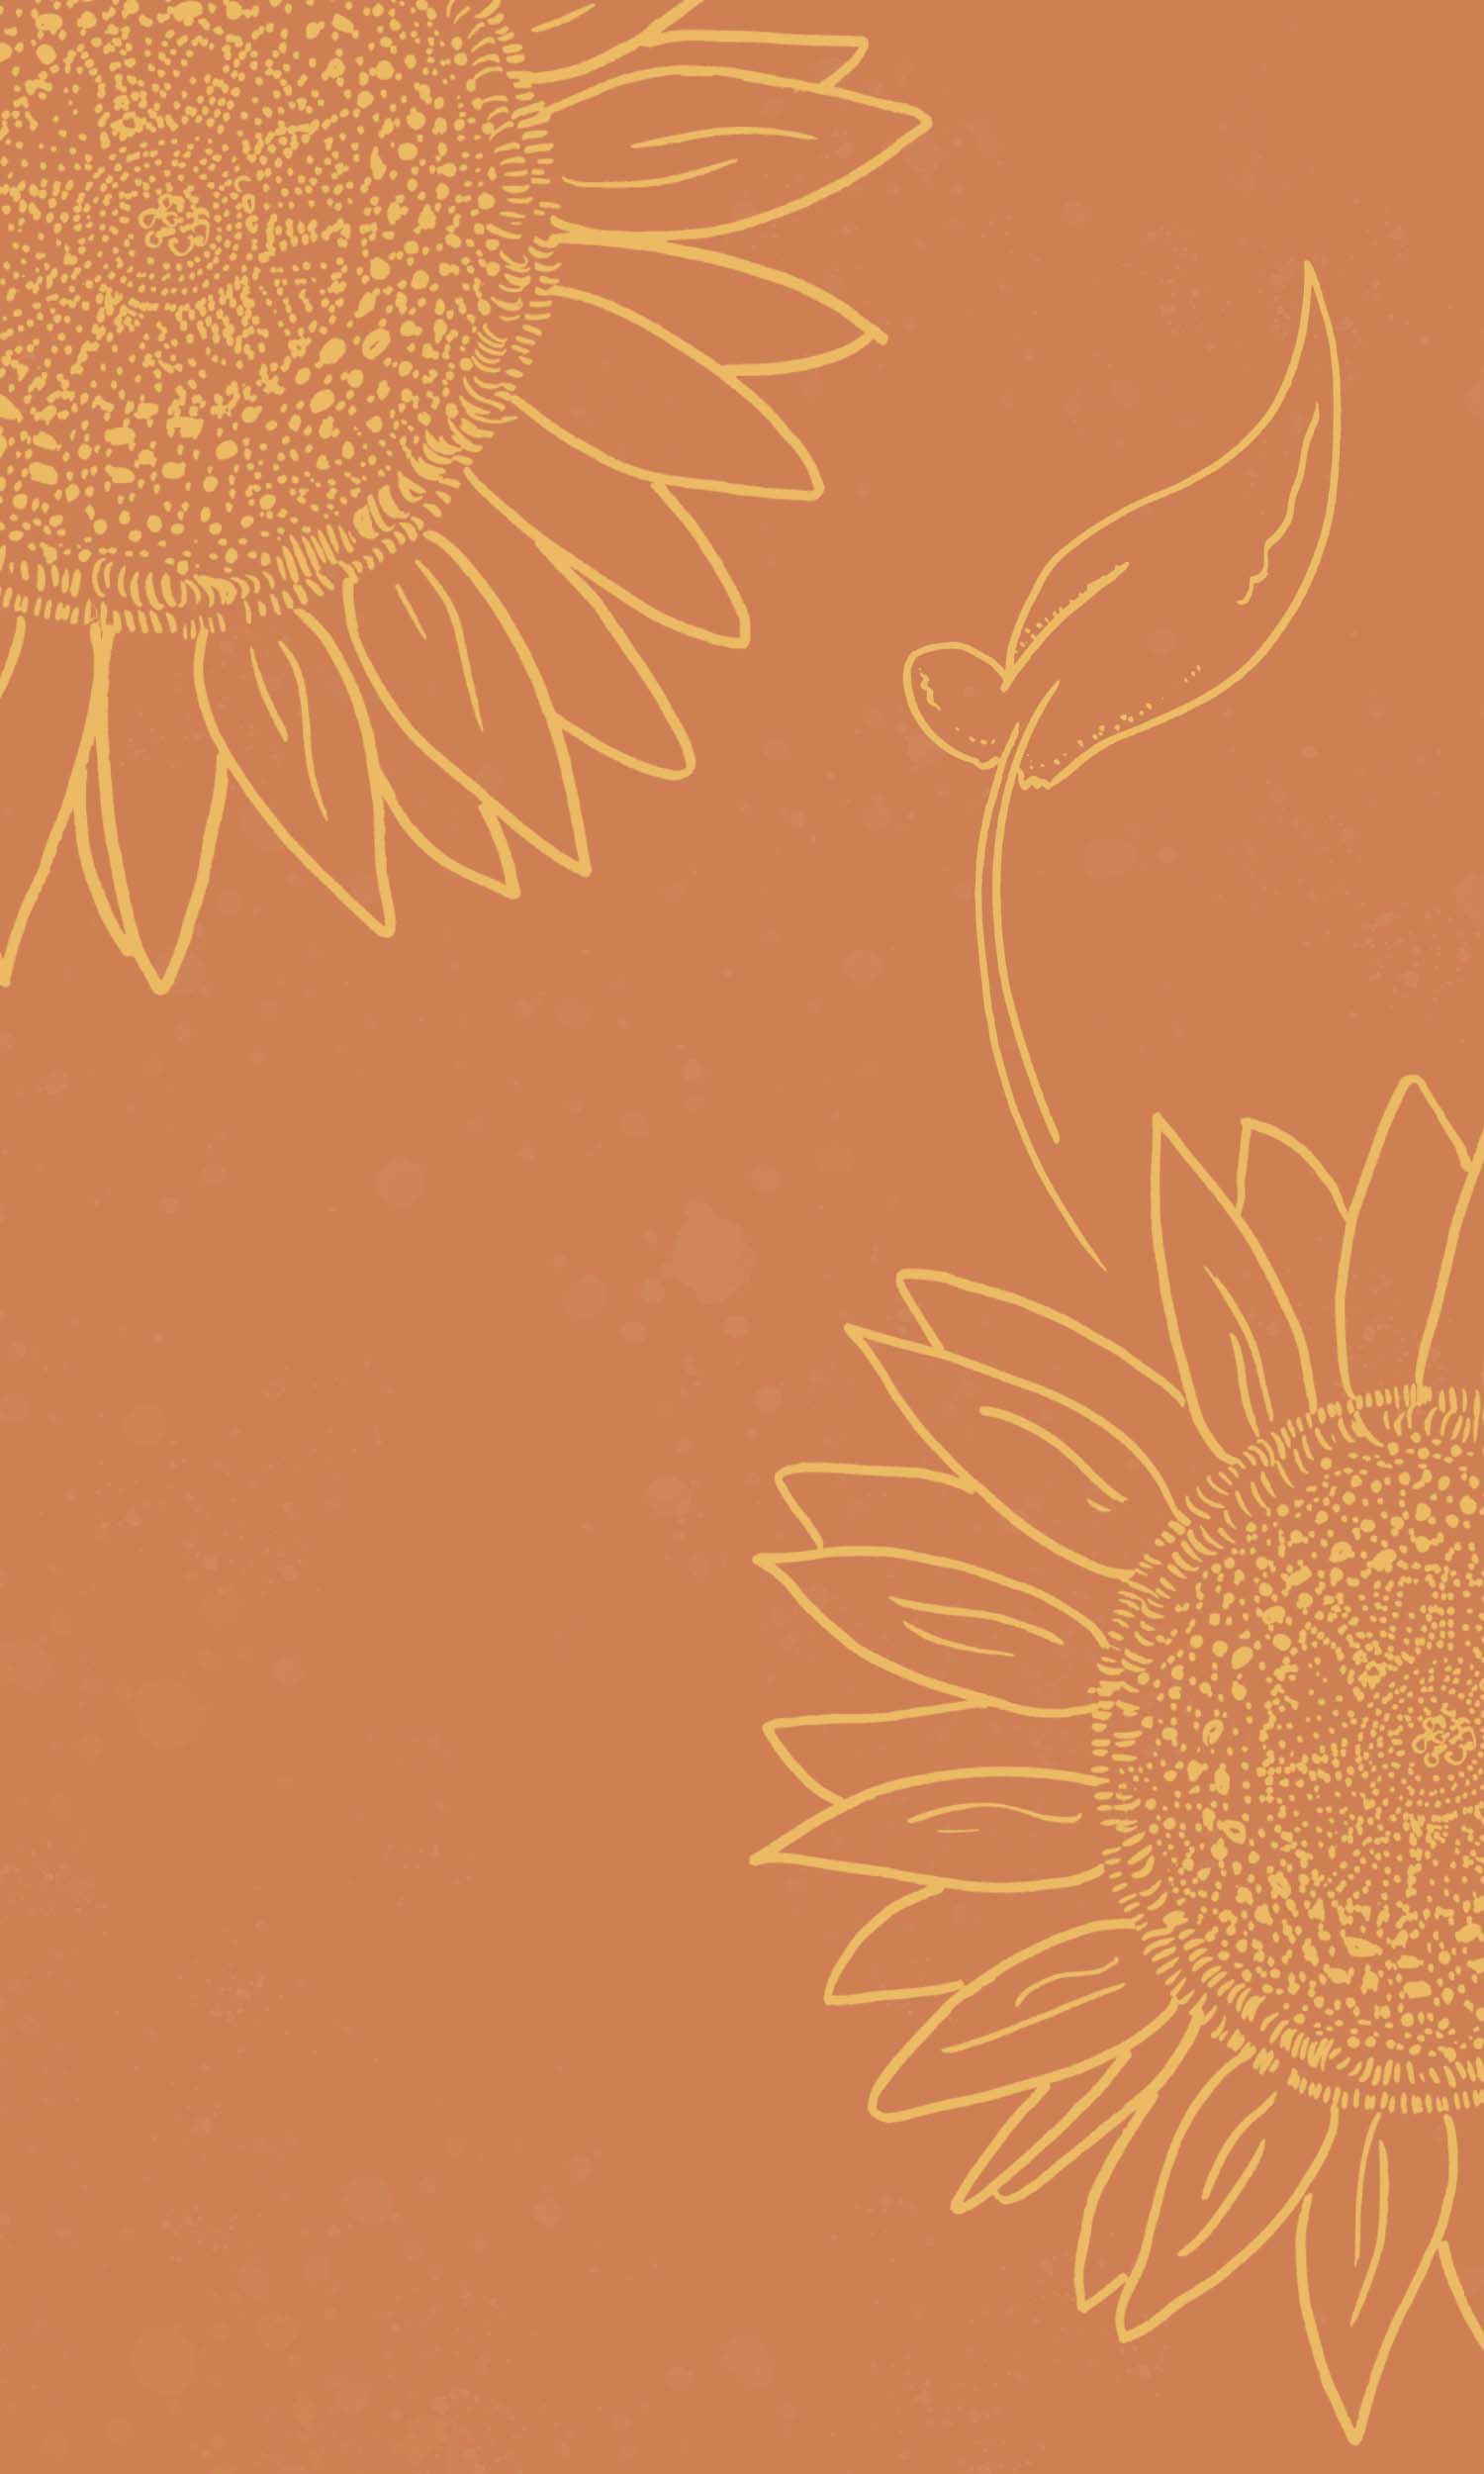 Sunflower Wallpapers